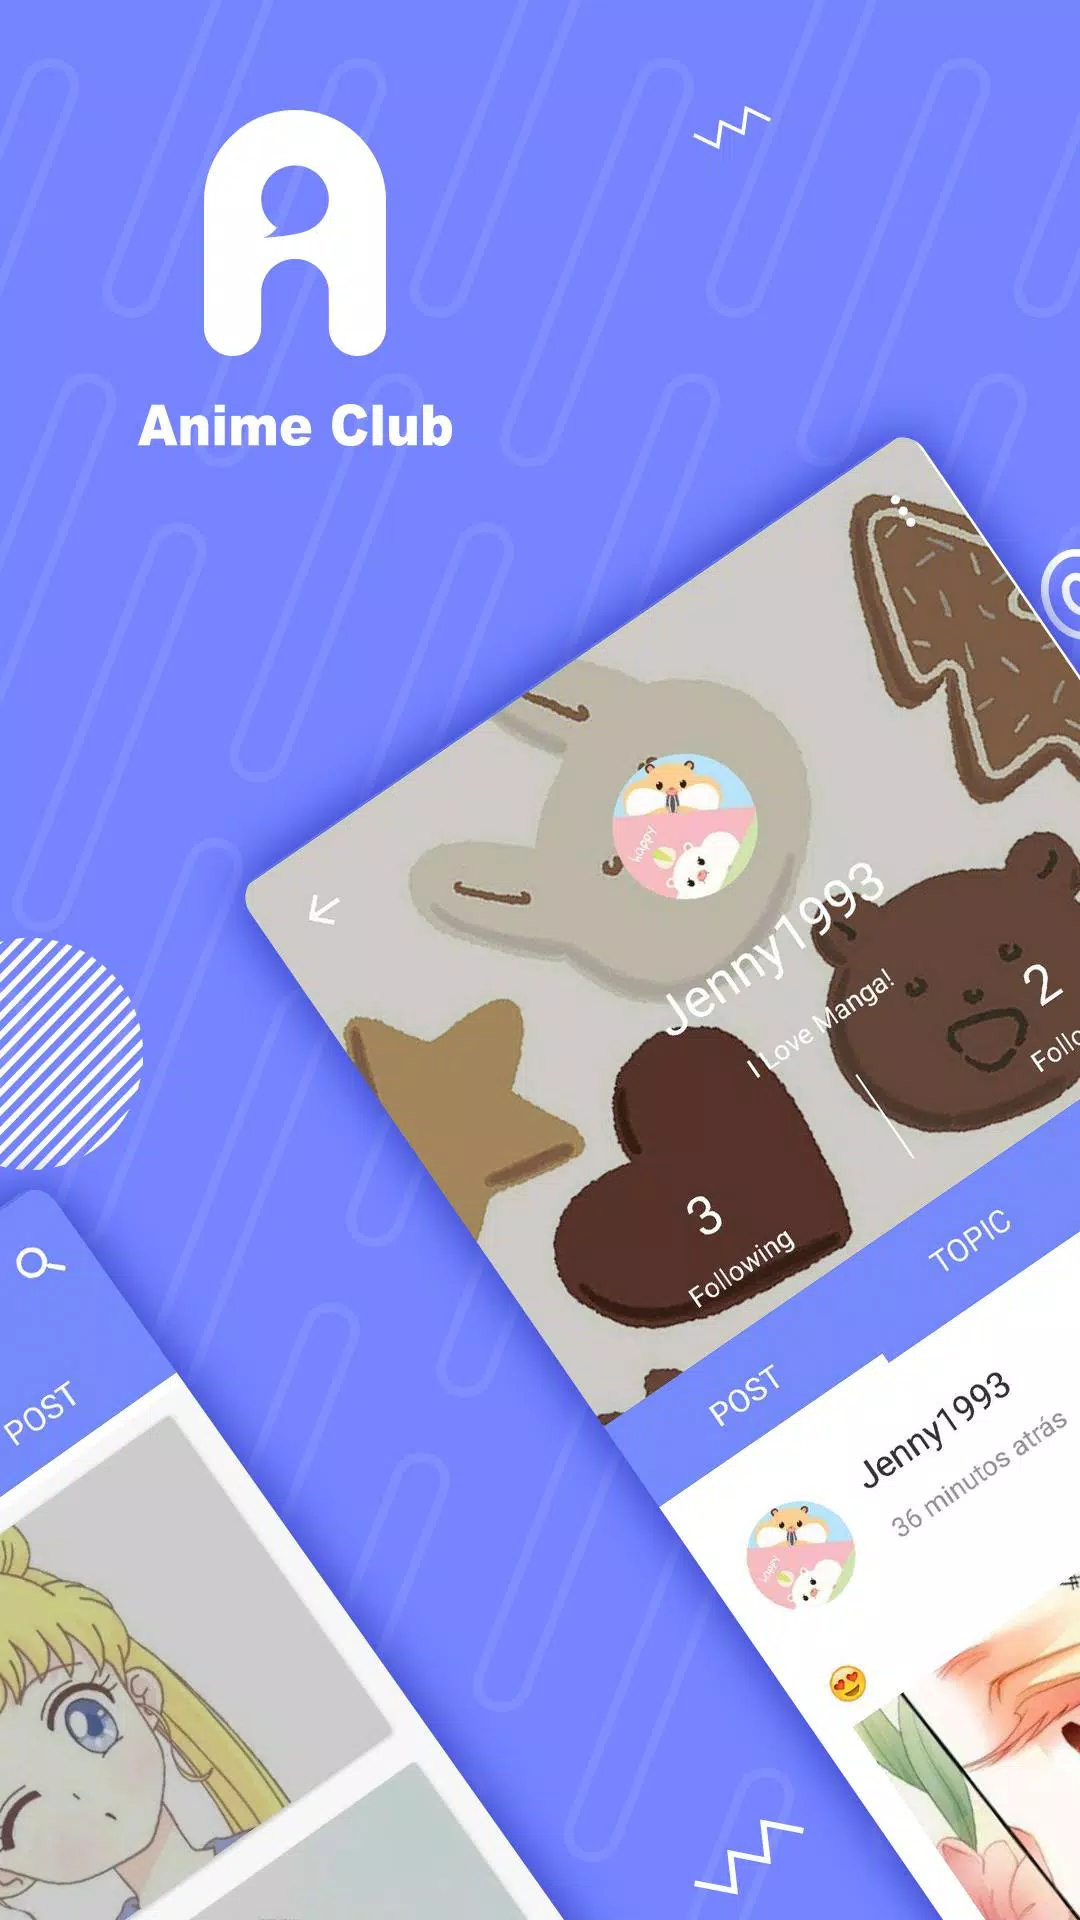 Tải xuống APK Anime Club cho Android